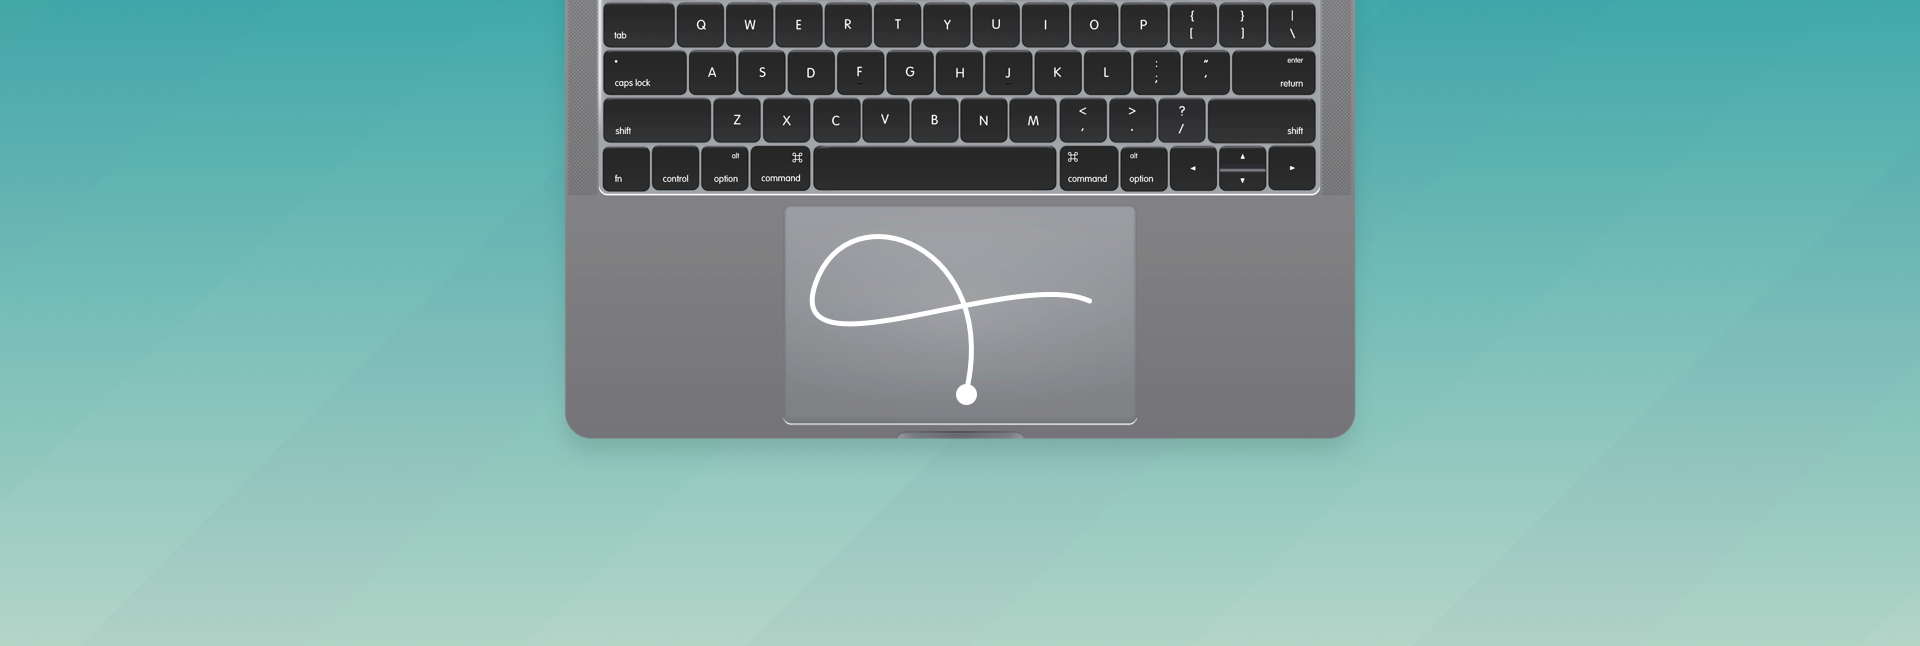 mac trackpad gestures